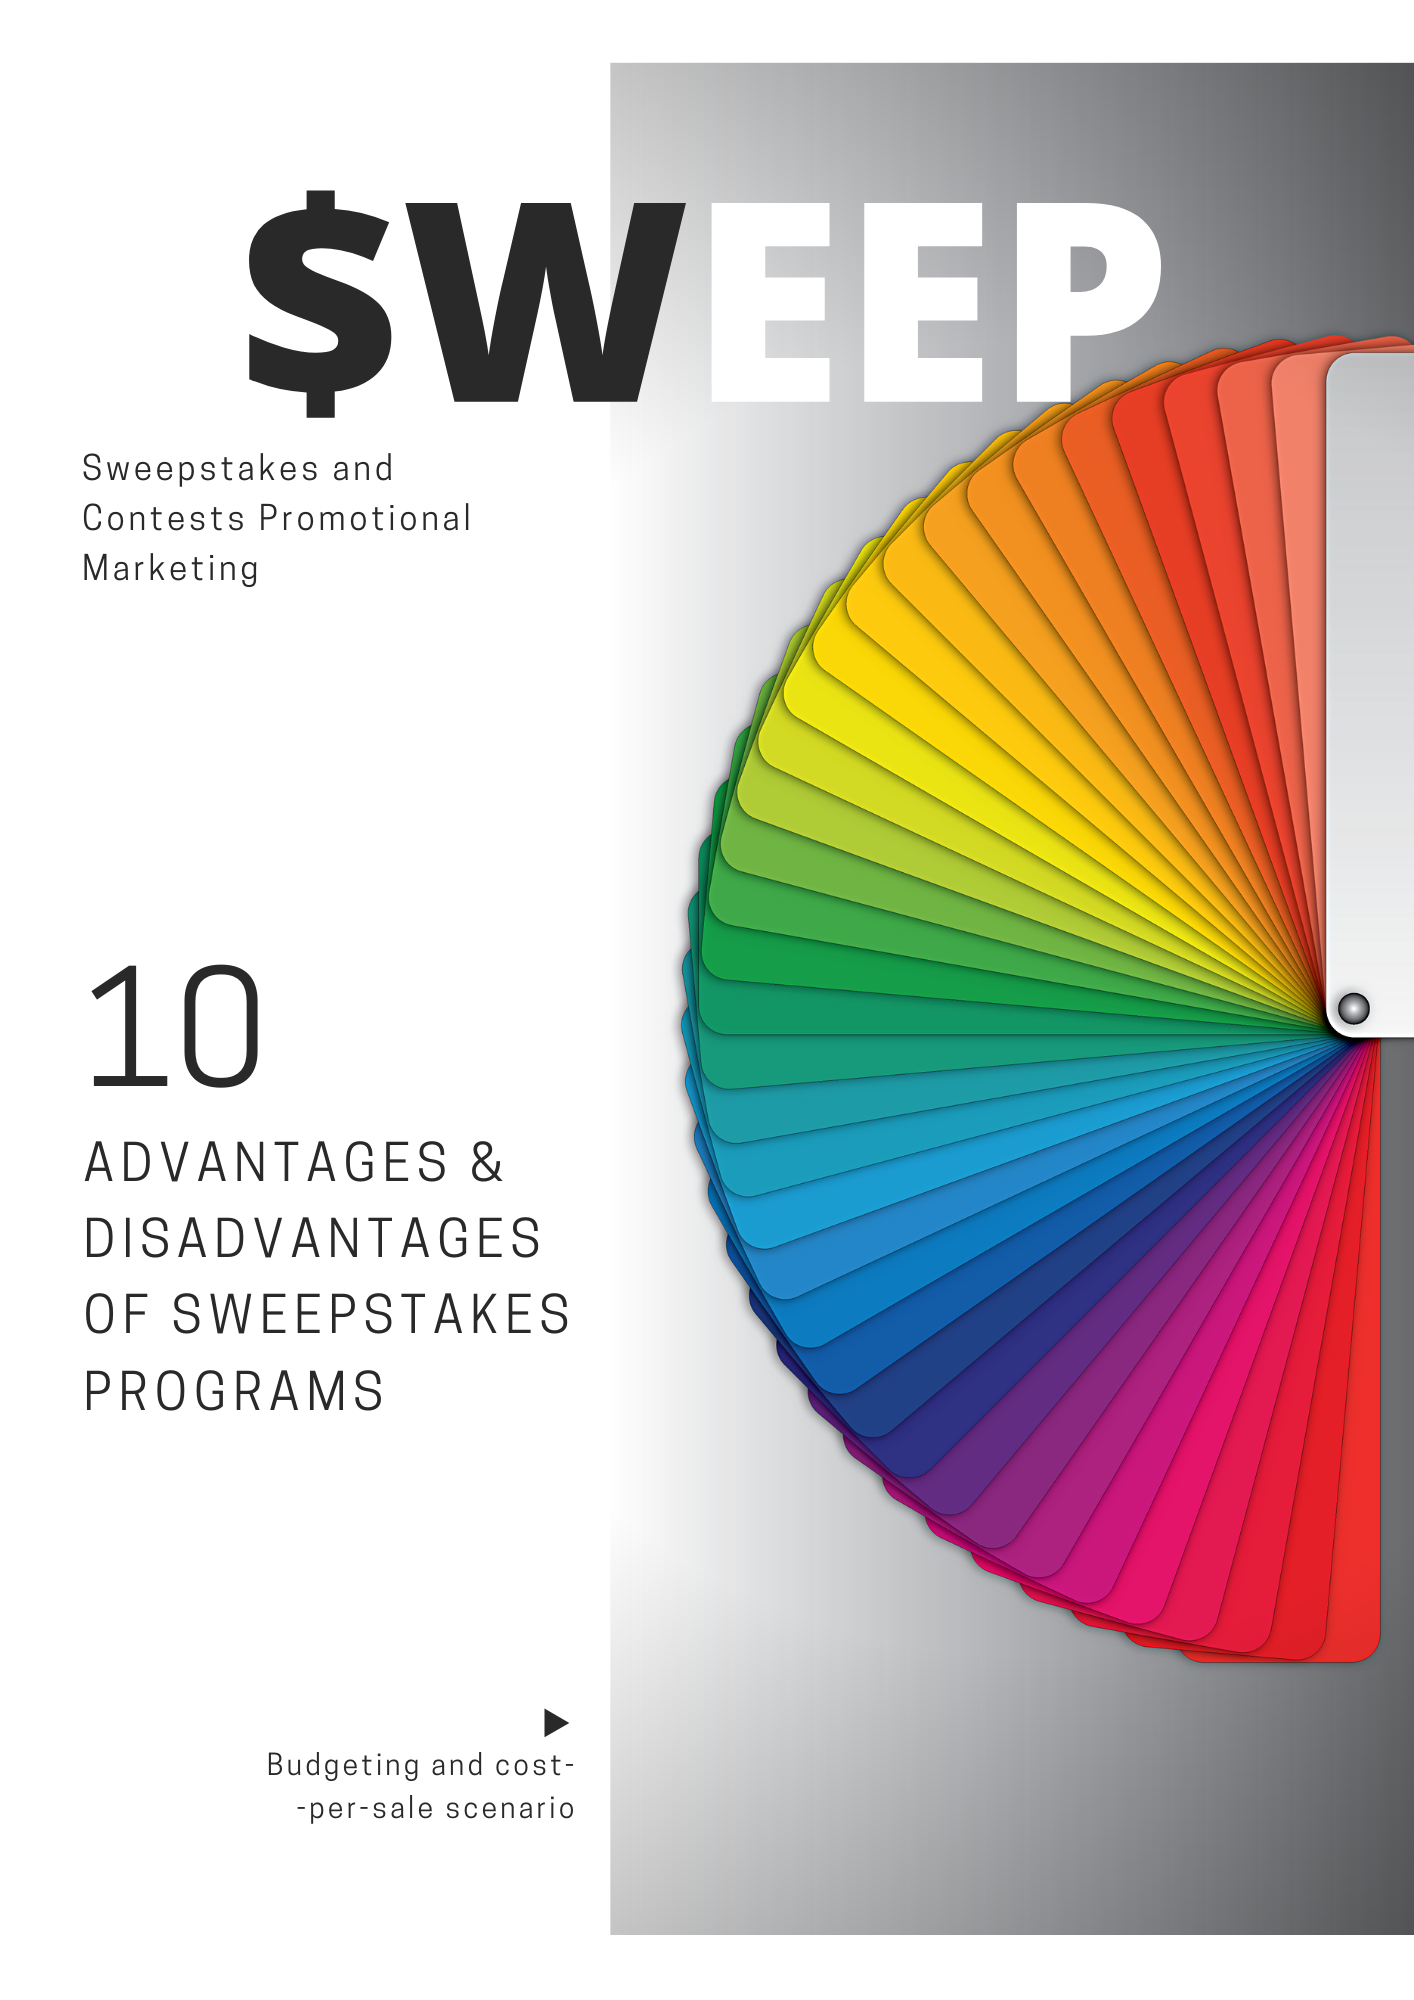 Sweepstakes Program - Promotional Marketing Tool #1